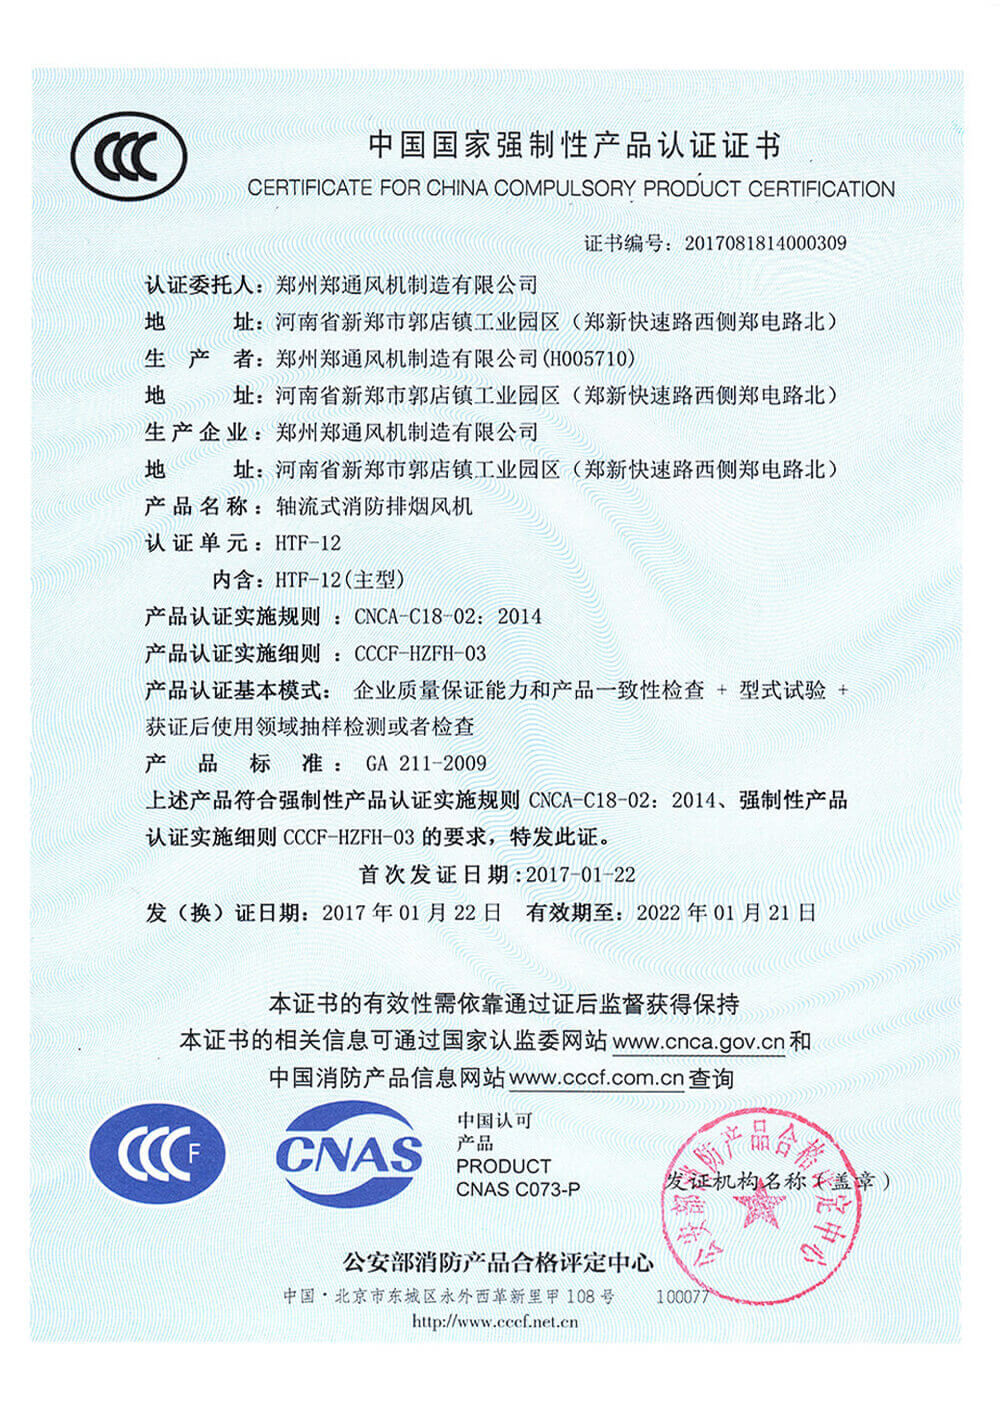 HTF-12 3C认证证书